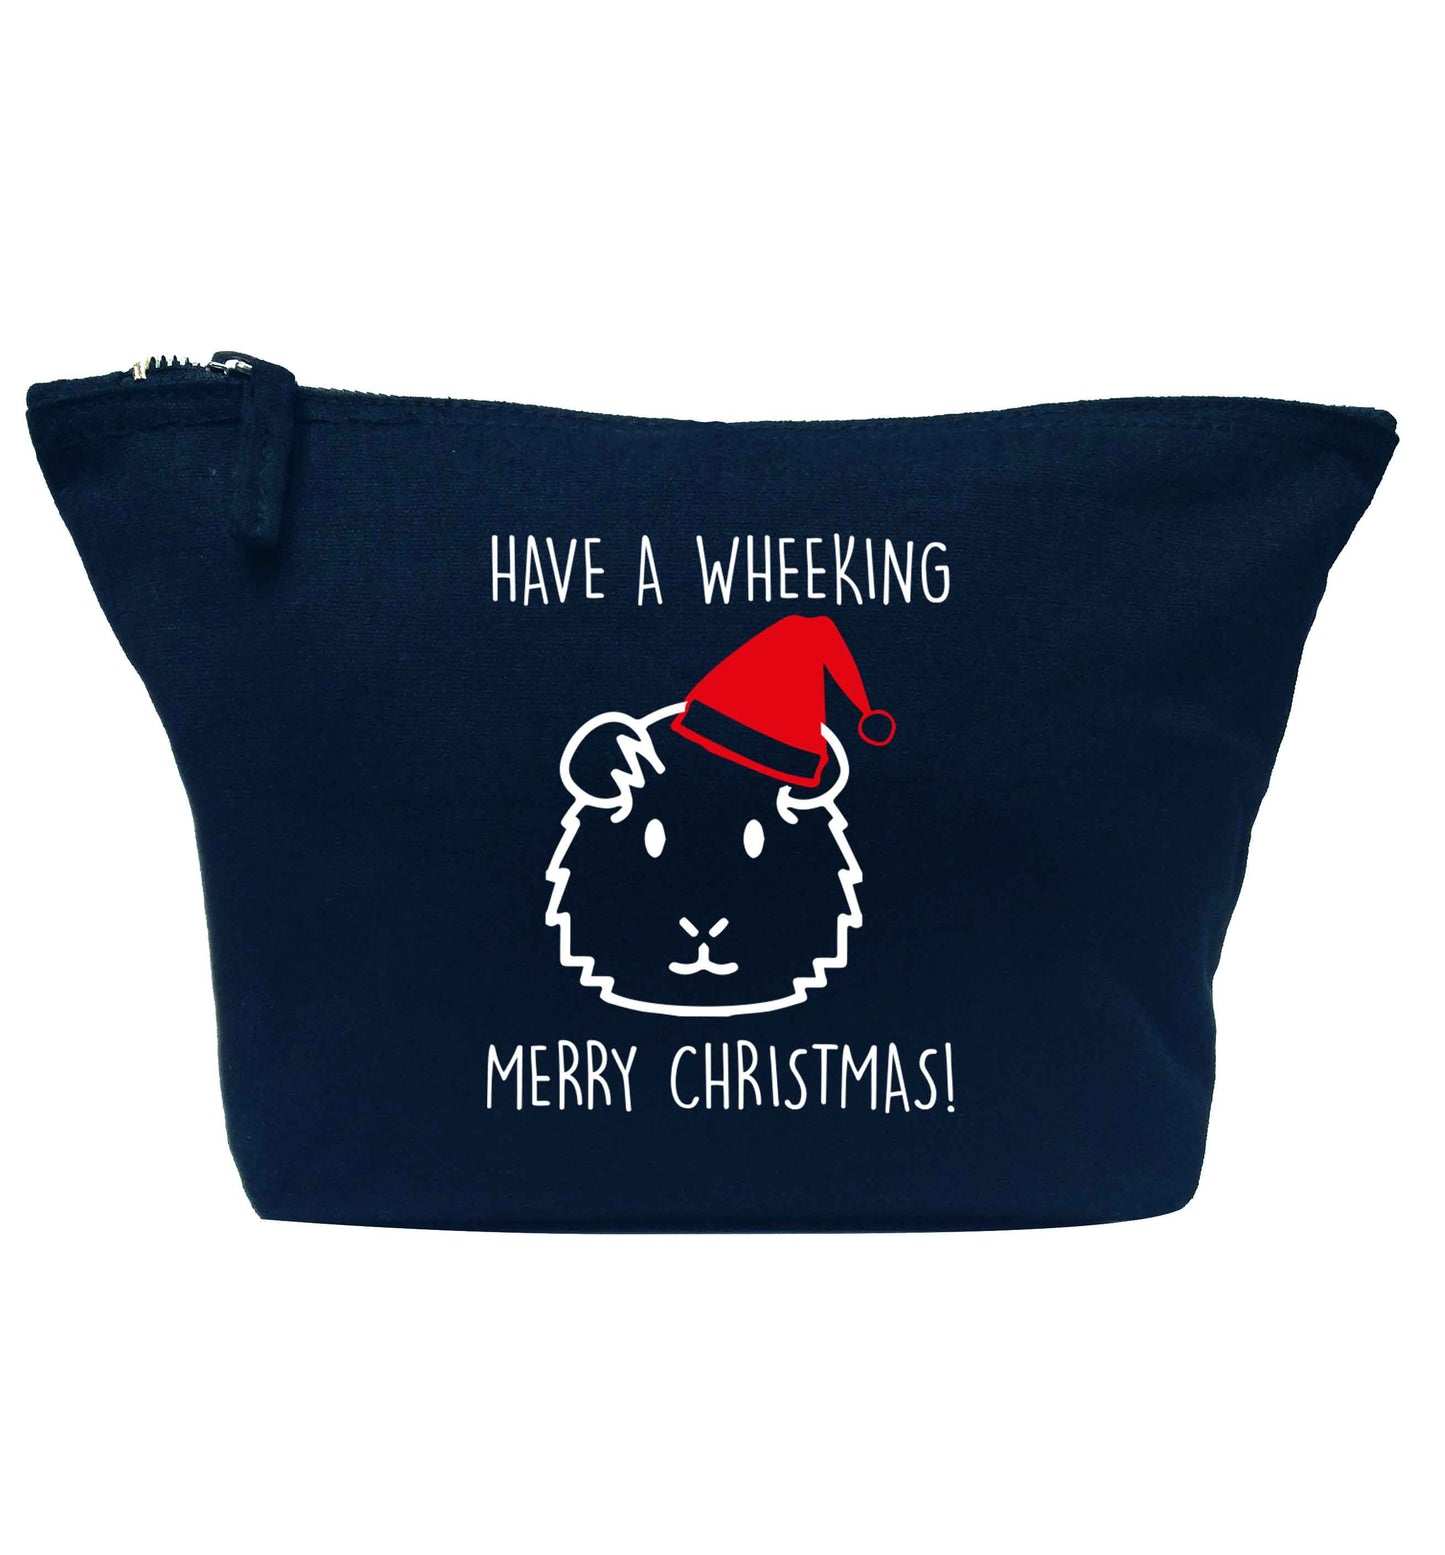 Have a wheeking merry Christmas navy makeup bag